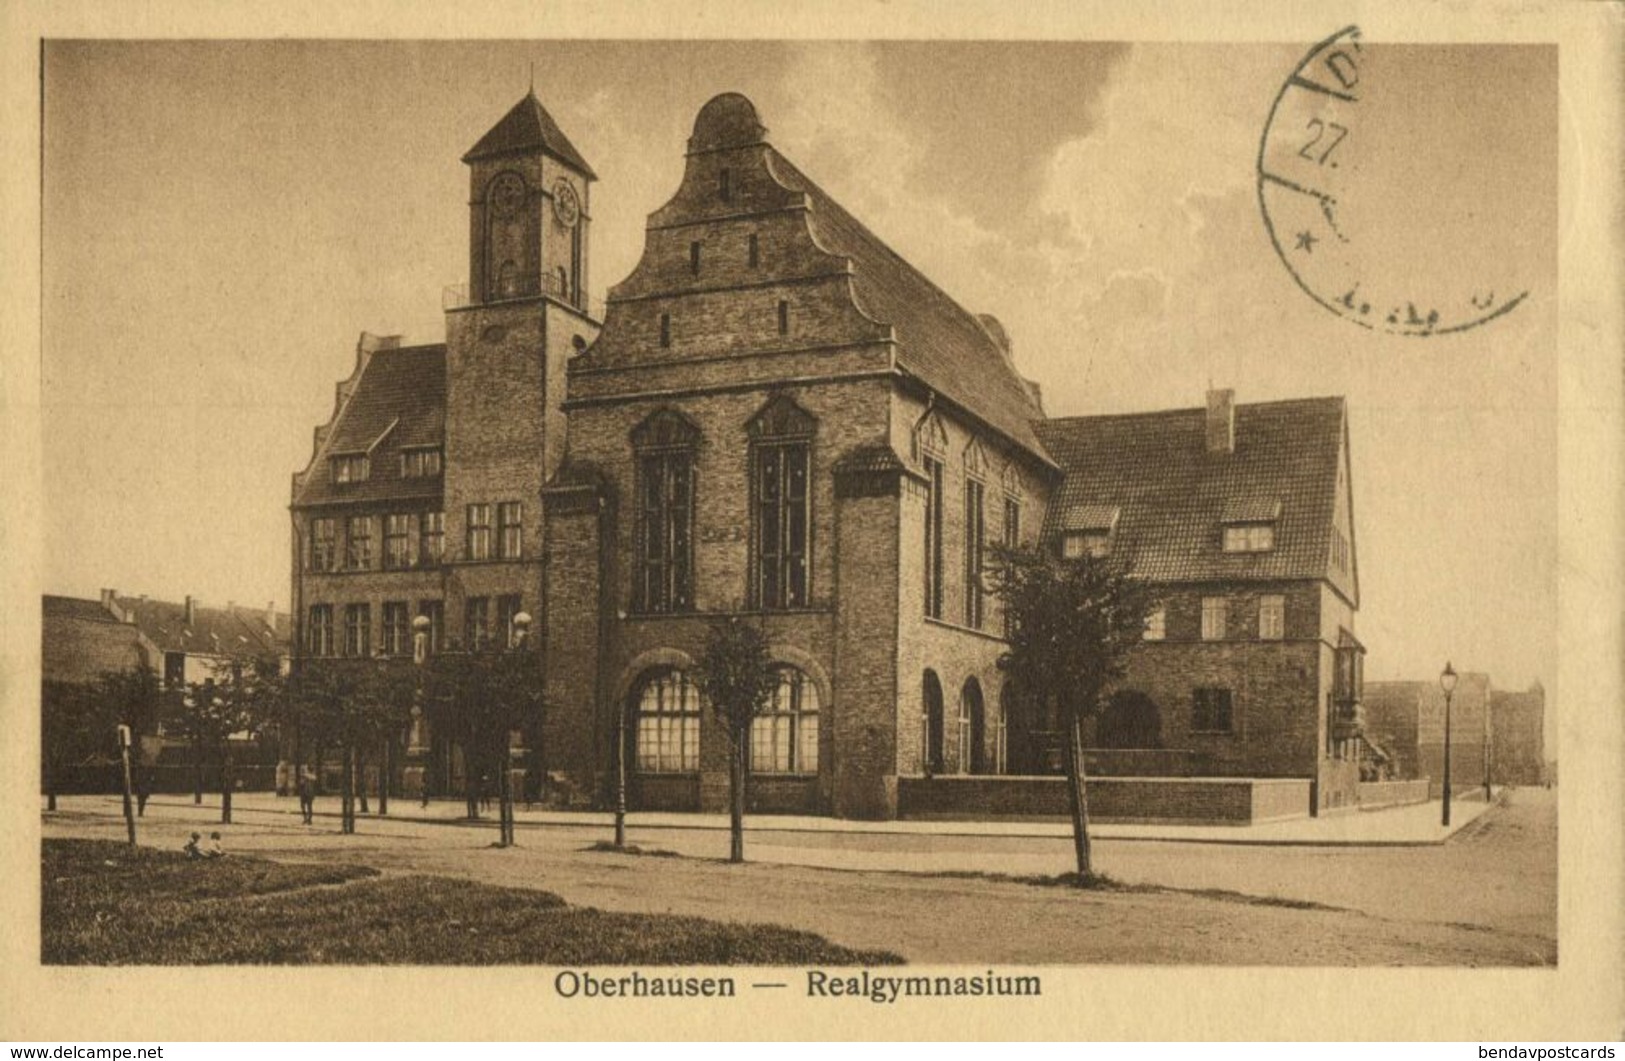 OBERHAUSEN, Rhld., Realgymnasium (1920s) AK - Oberhausen